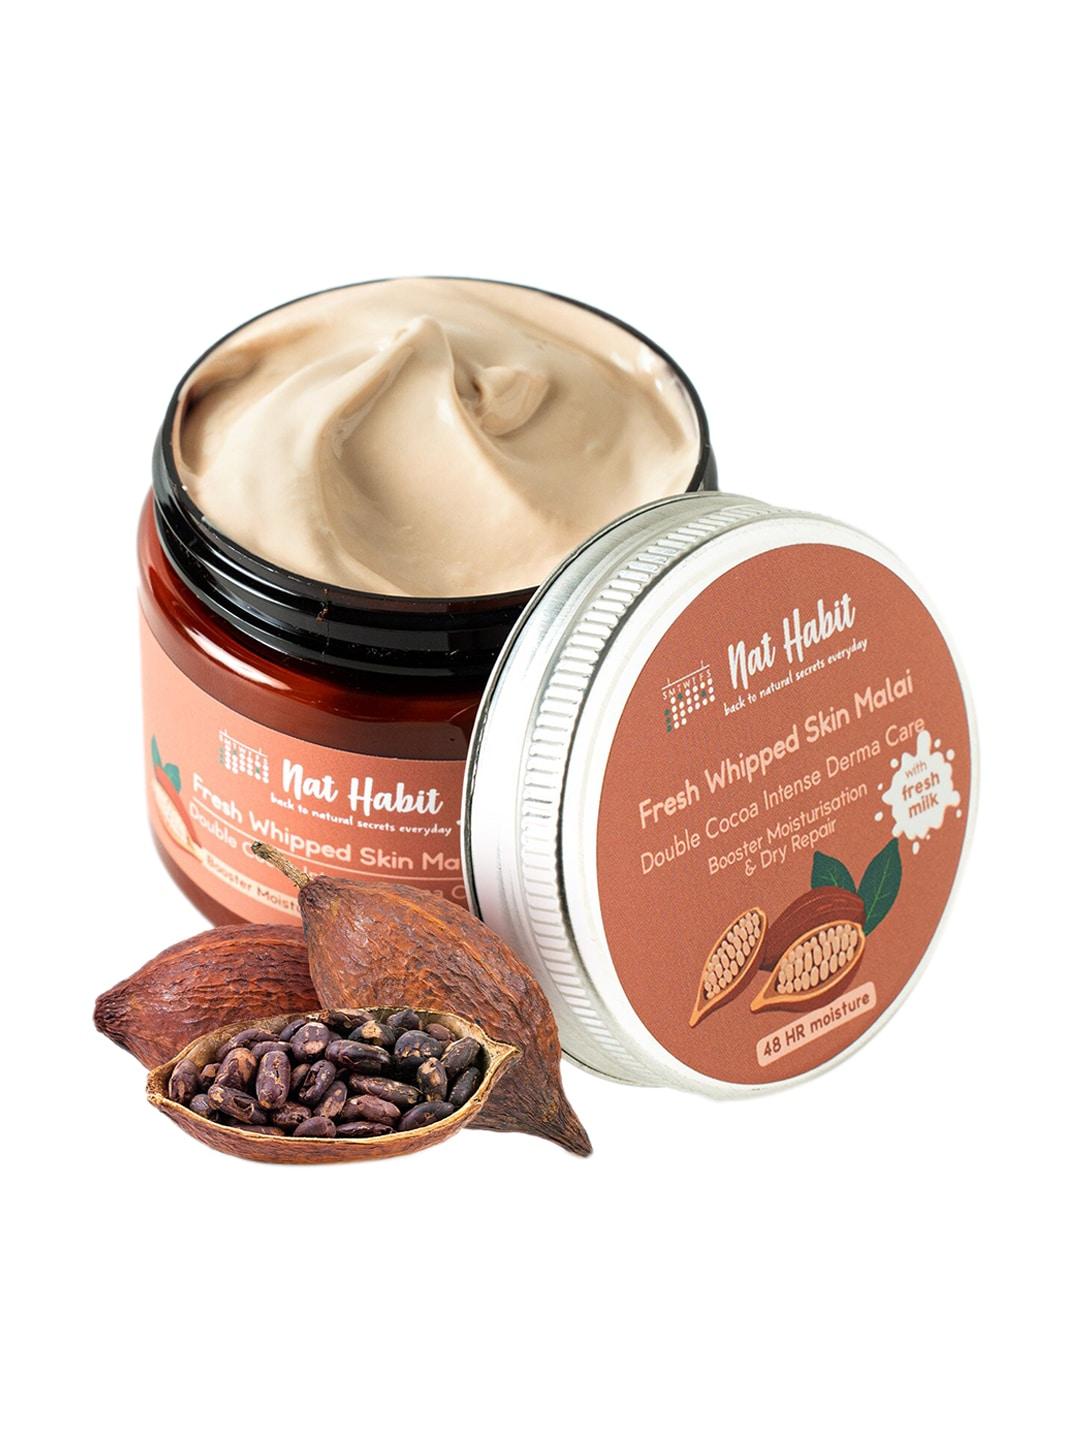 nat Habit Double Cocoa Intense Derma Care Fresh Whipped Skin Malai Body Butter - 200 ml